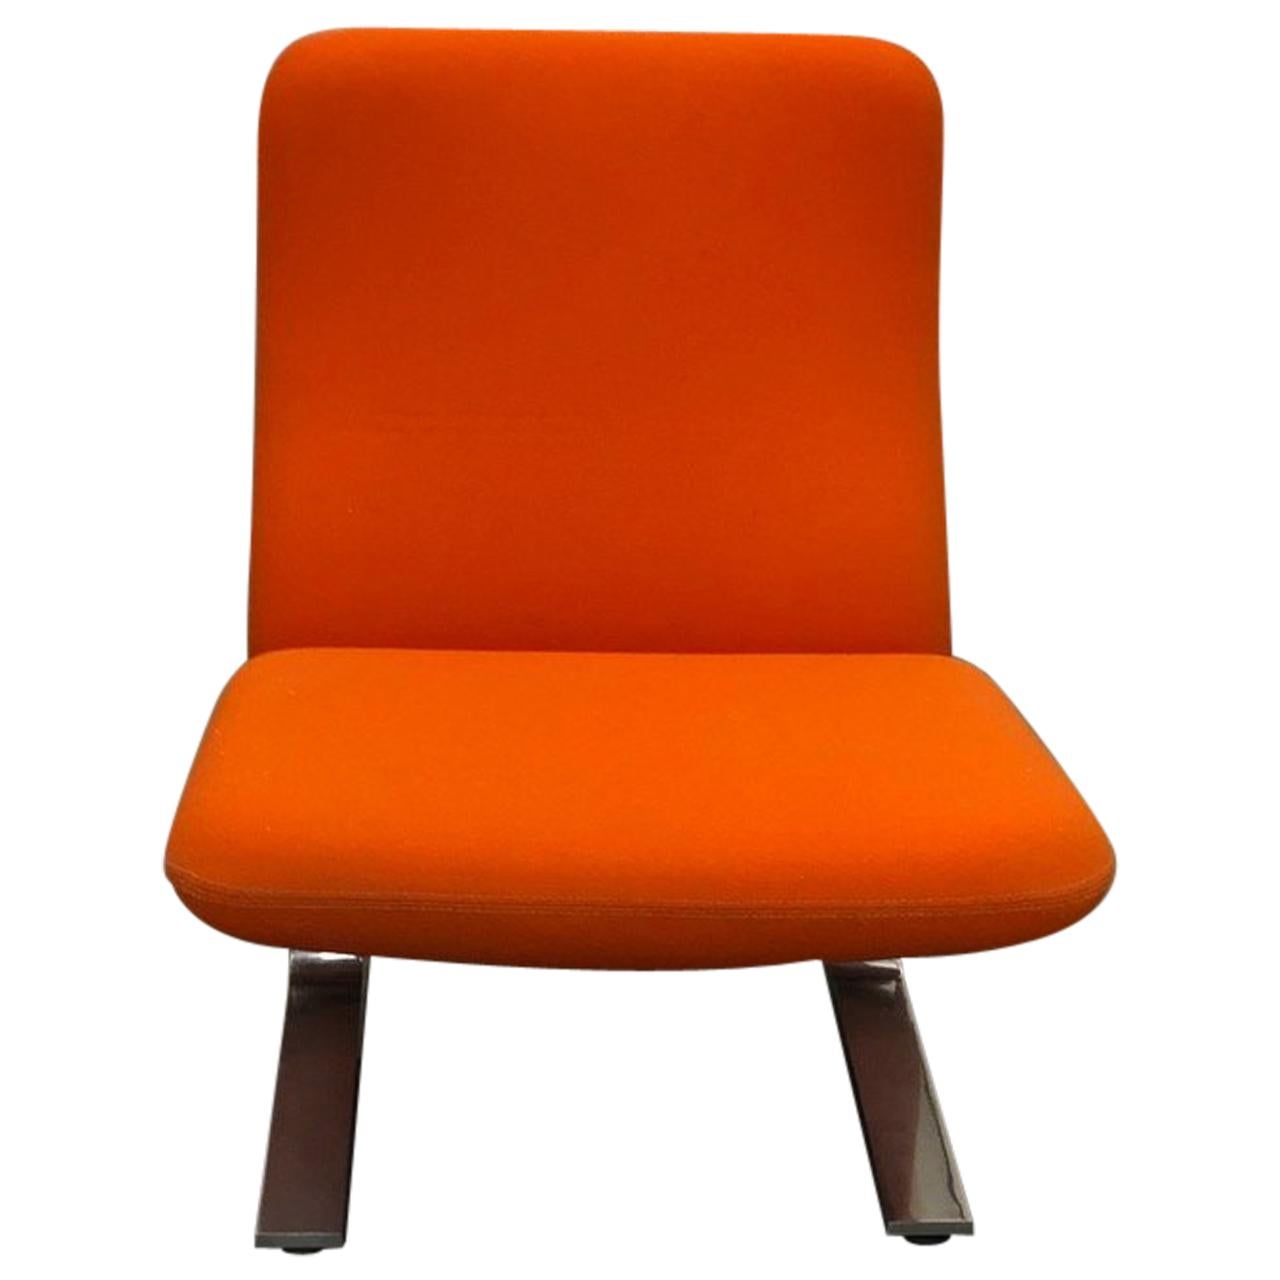 Artifort Classic Orange Low Back Concorde Chair by Pierre Paulin